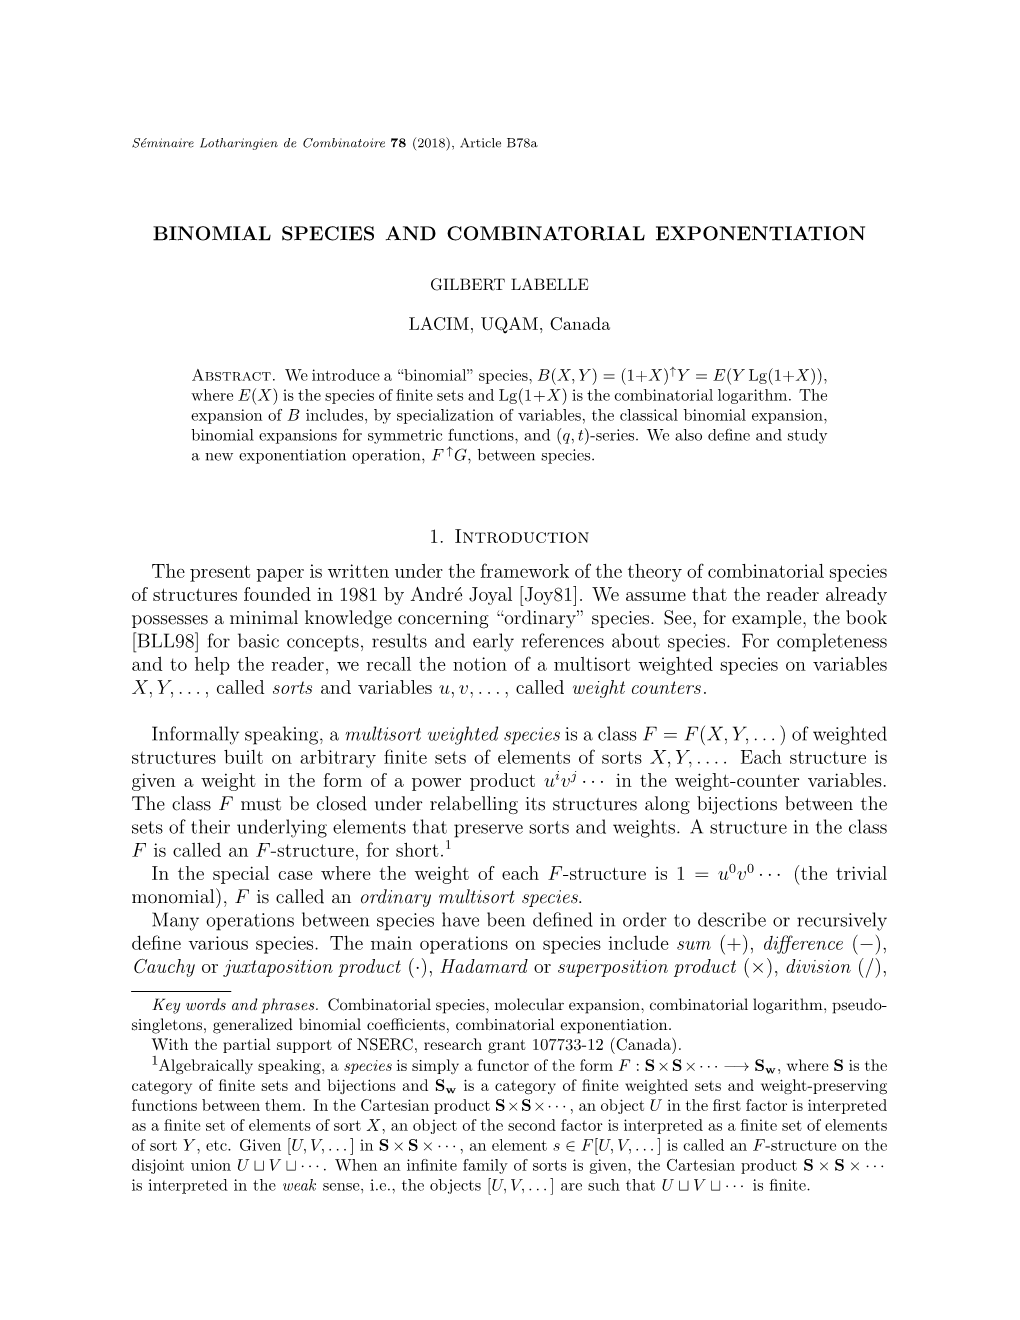 Binomial Species and Combinatorial Exponentiation